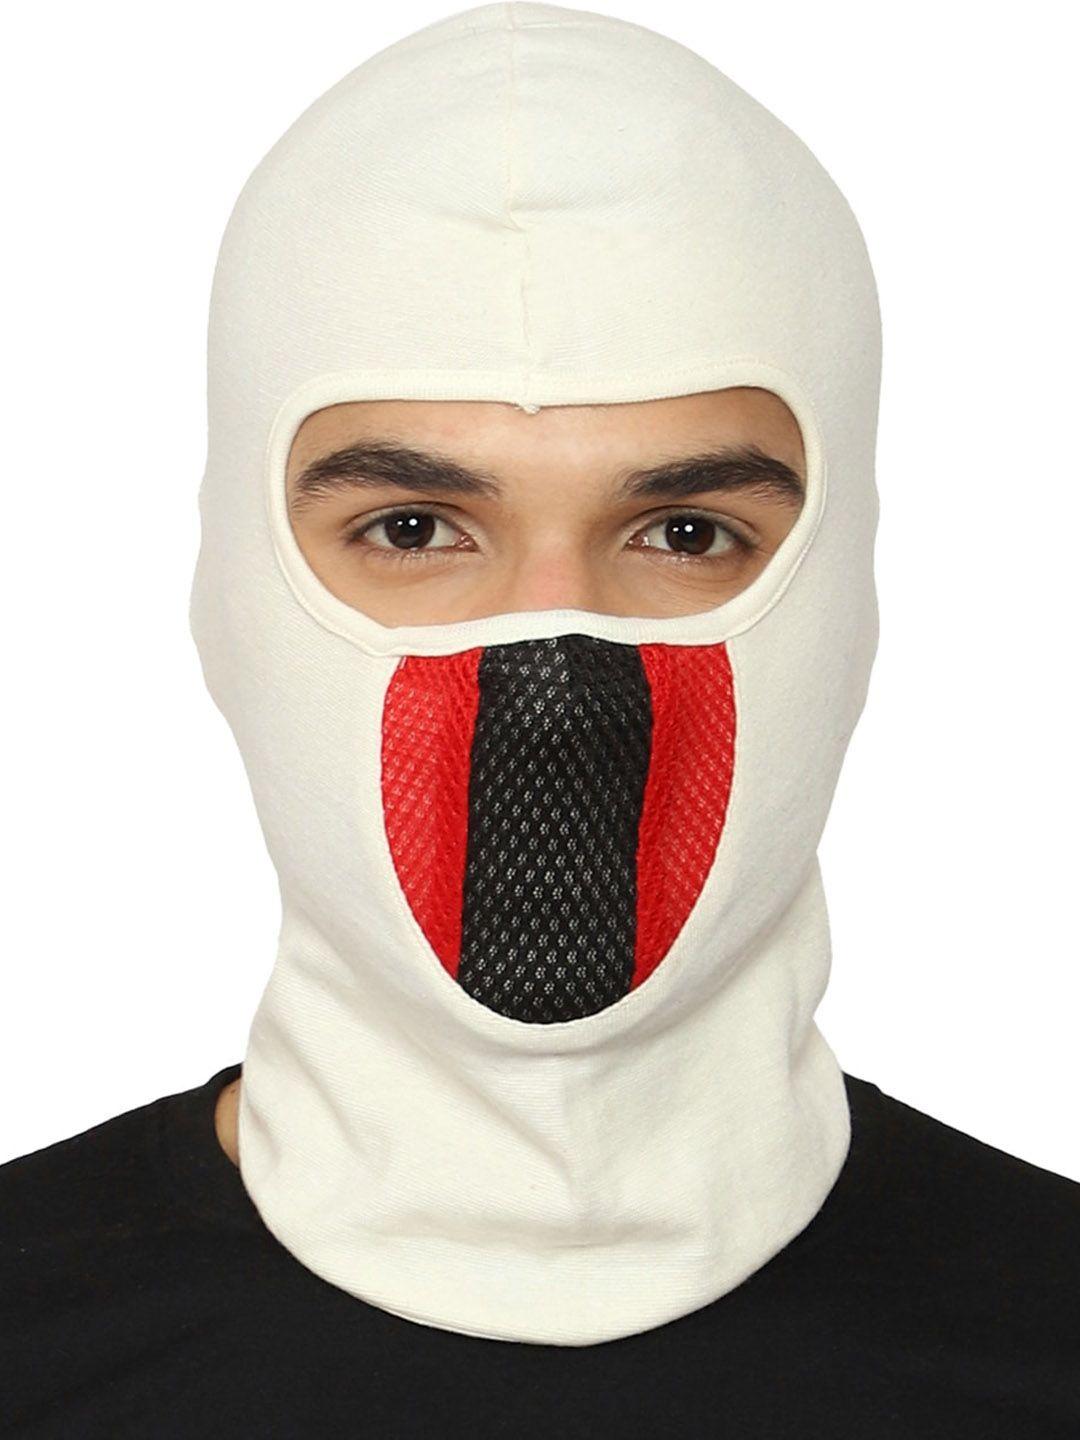 gajraj reusable full face mask with air filter mesh